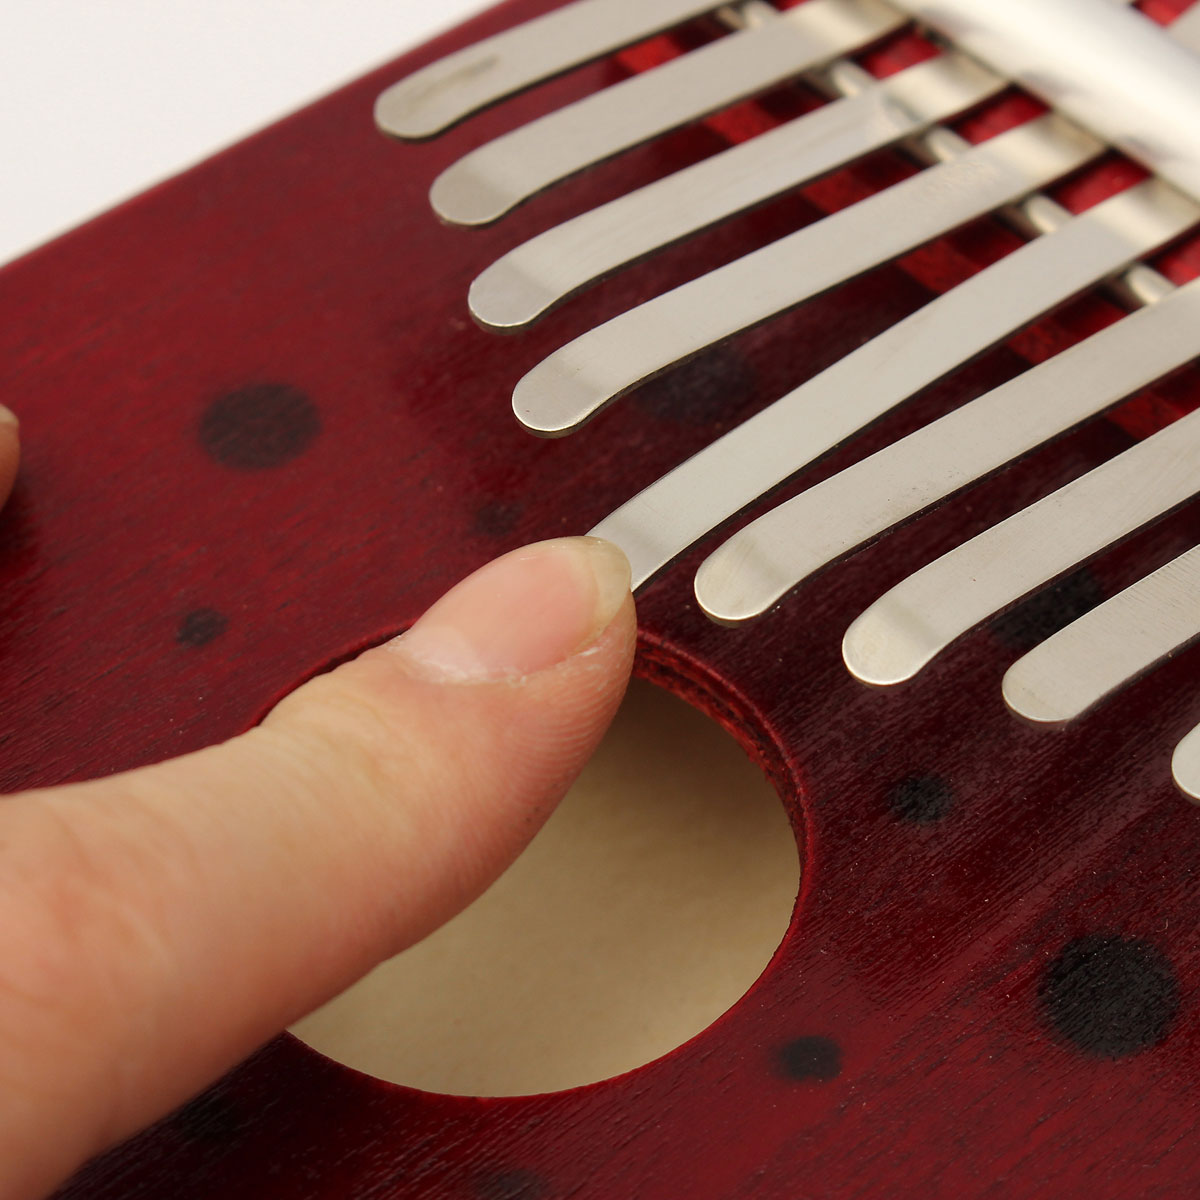 10 Tone Red/Natural Color Portable Wood Kalimba Thumb Piano Finger Percussion